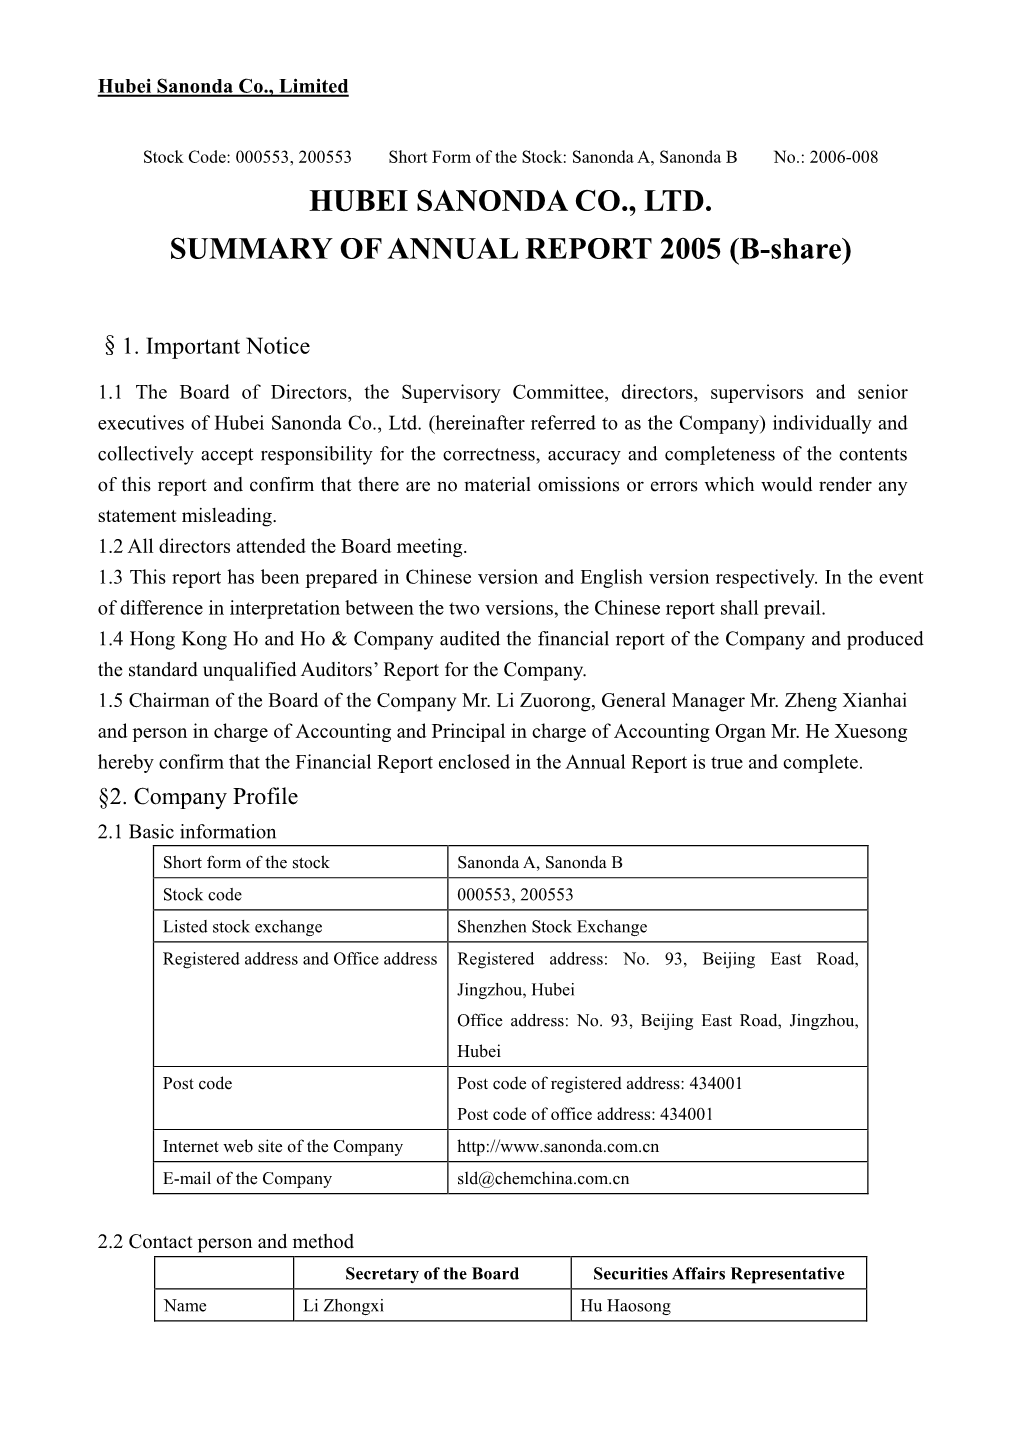 HUBEI SANONDA CO., LTD. SUMMARY of ANNUAL REPORT 2005 (B-Share)